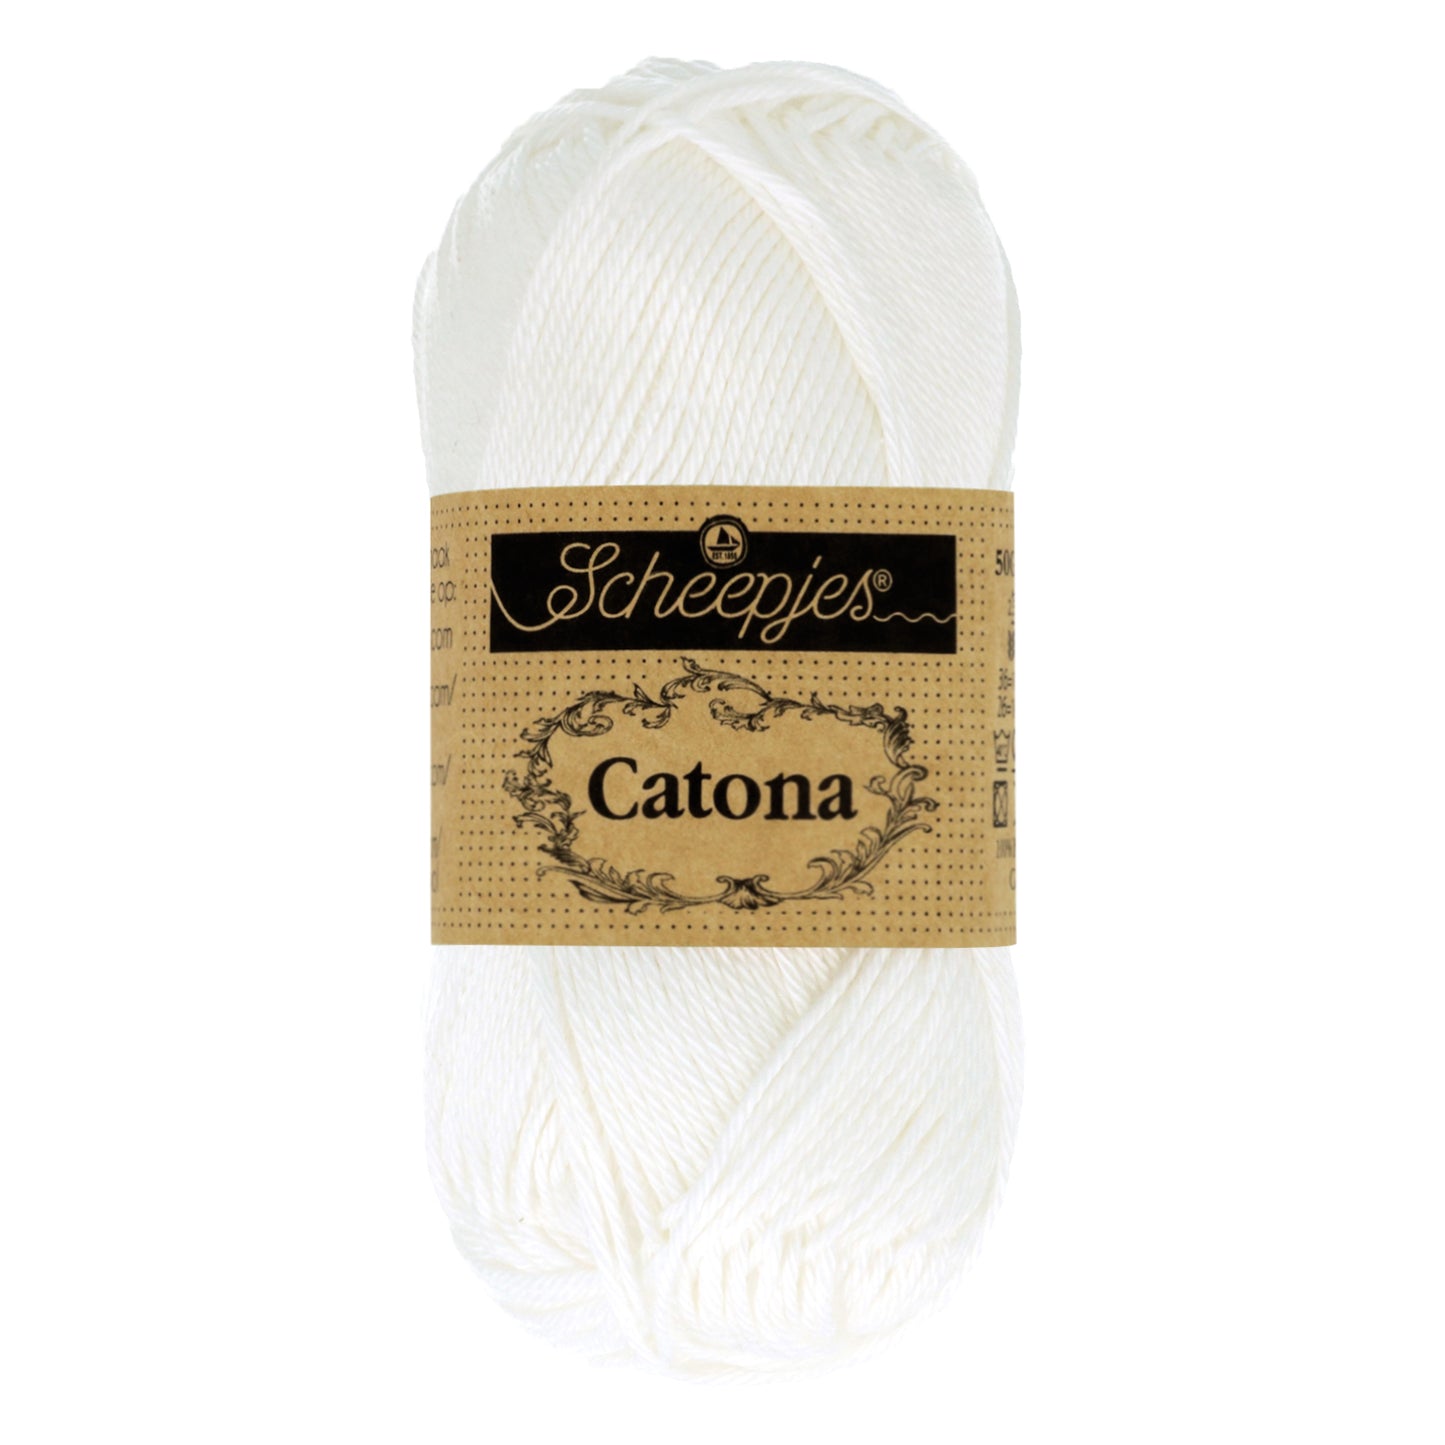 Scheepjes Catona cotton yarn- 106 Snow White